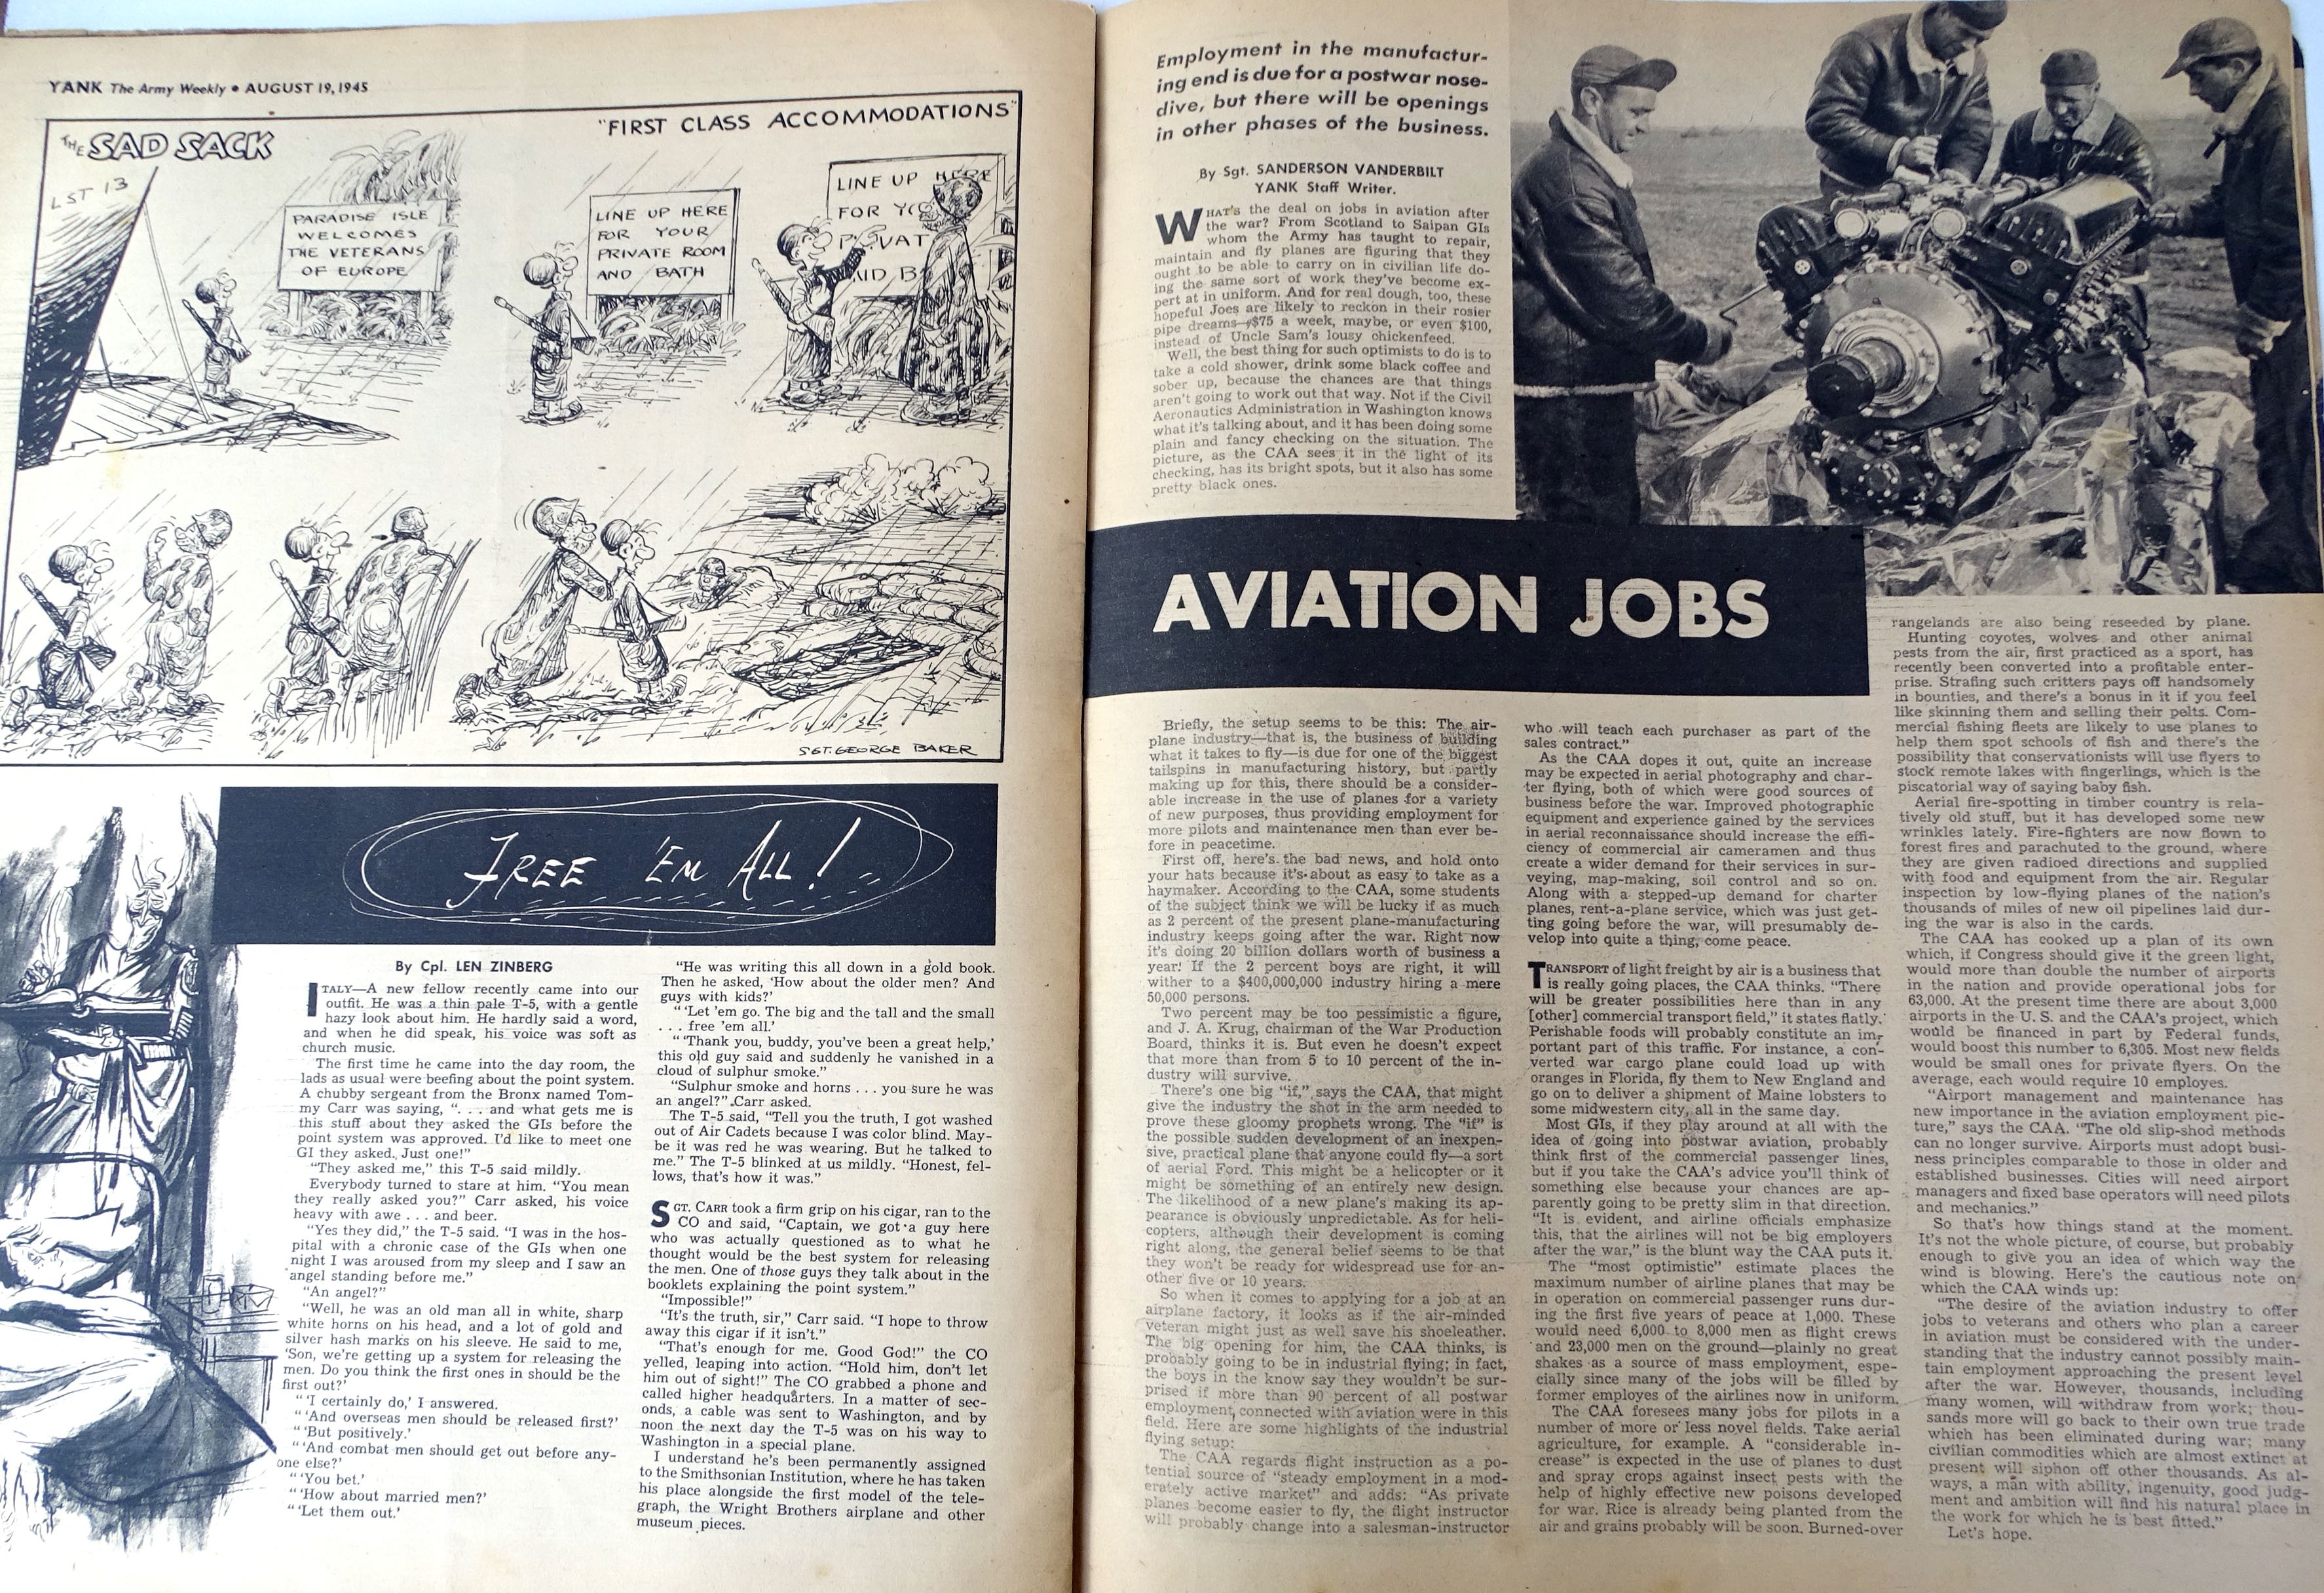 Yank magazine August 19 1945. Continental edition Victoire sur le Japon  Howard Brodie